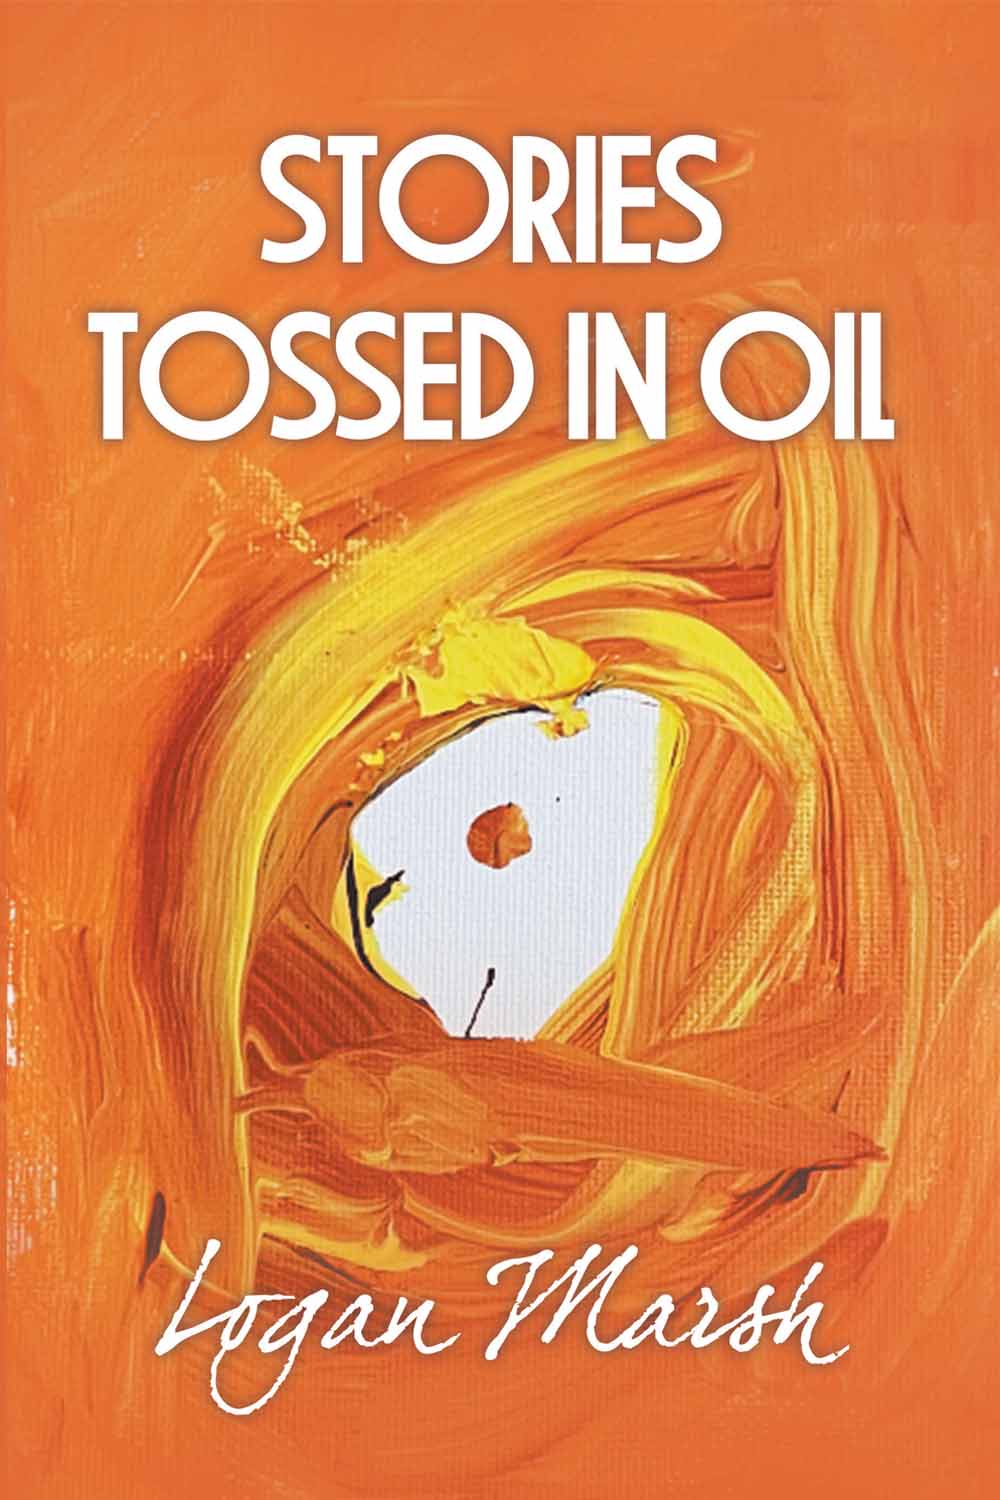 Stories Tossed in Oil by Logan Marsh